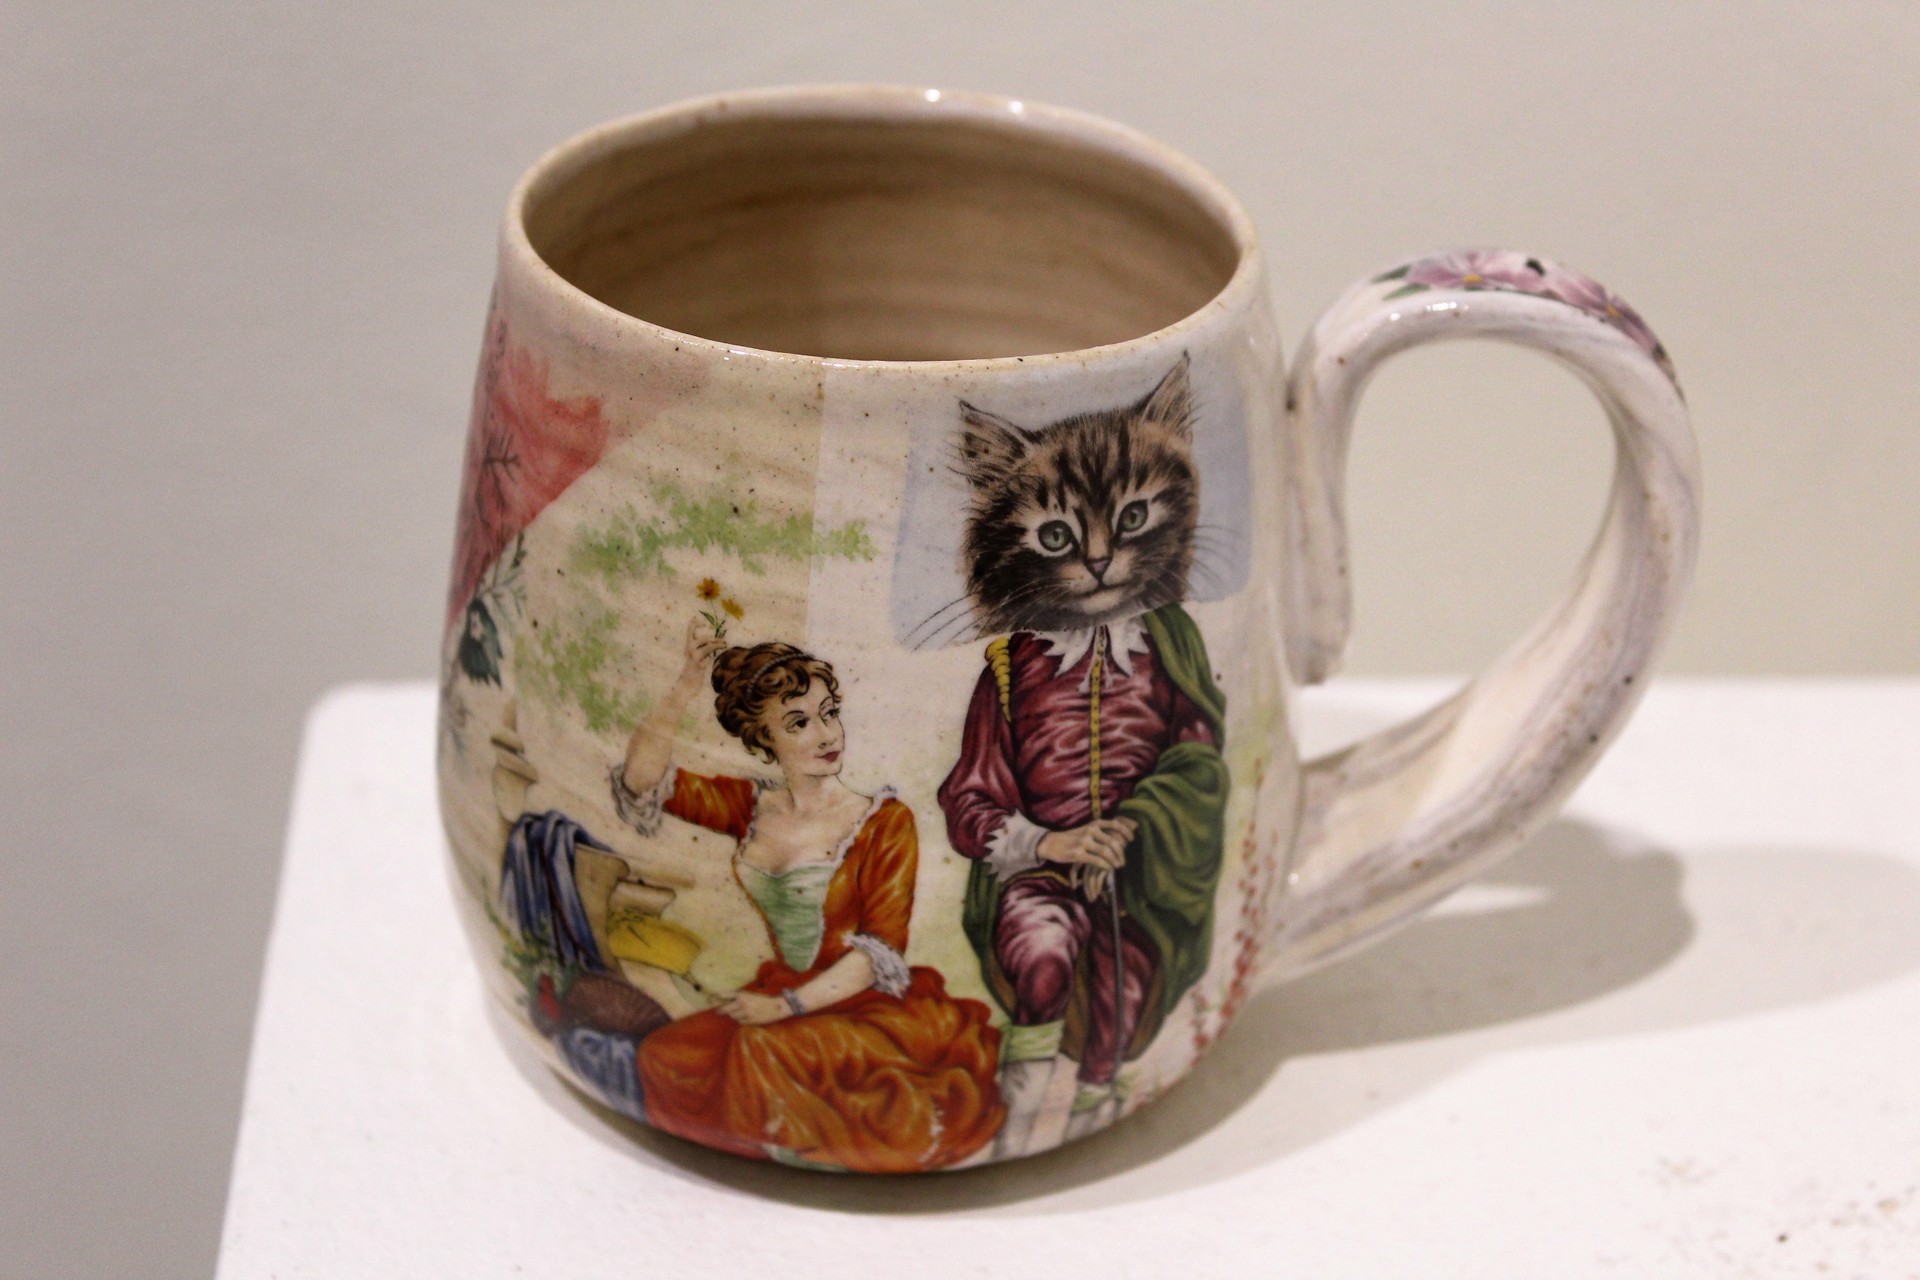 Mug with Cat-Headed Human by Kristen Kinnaley